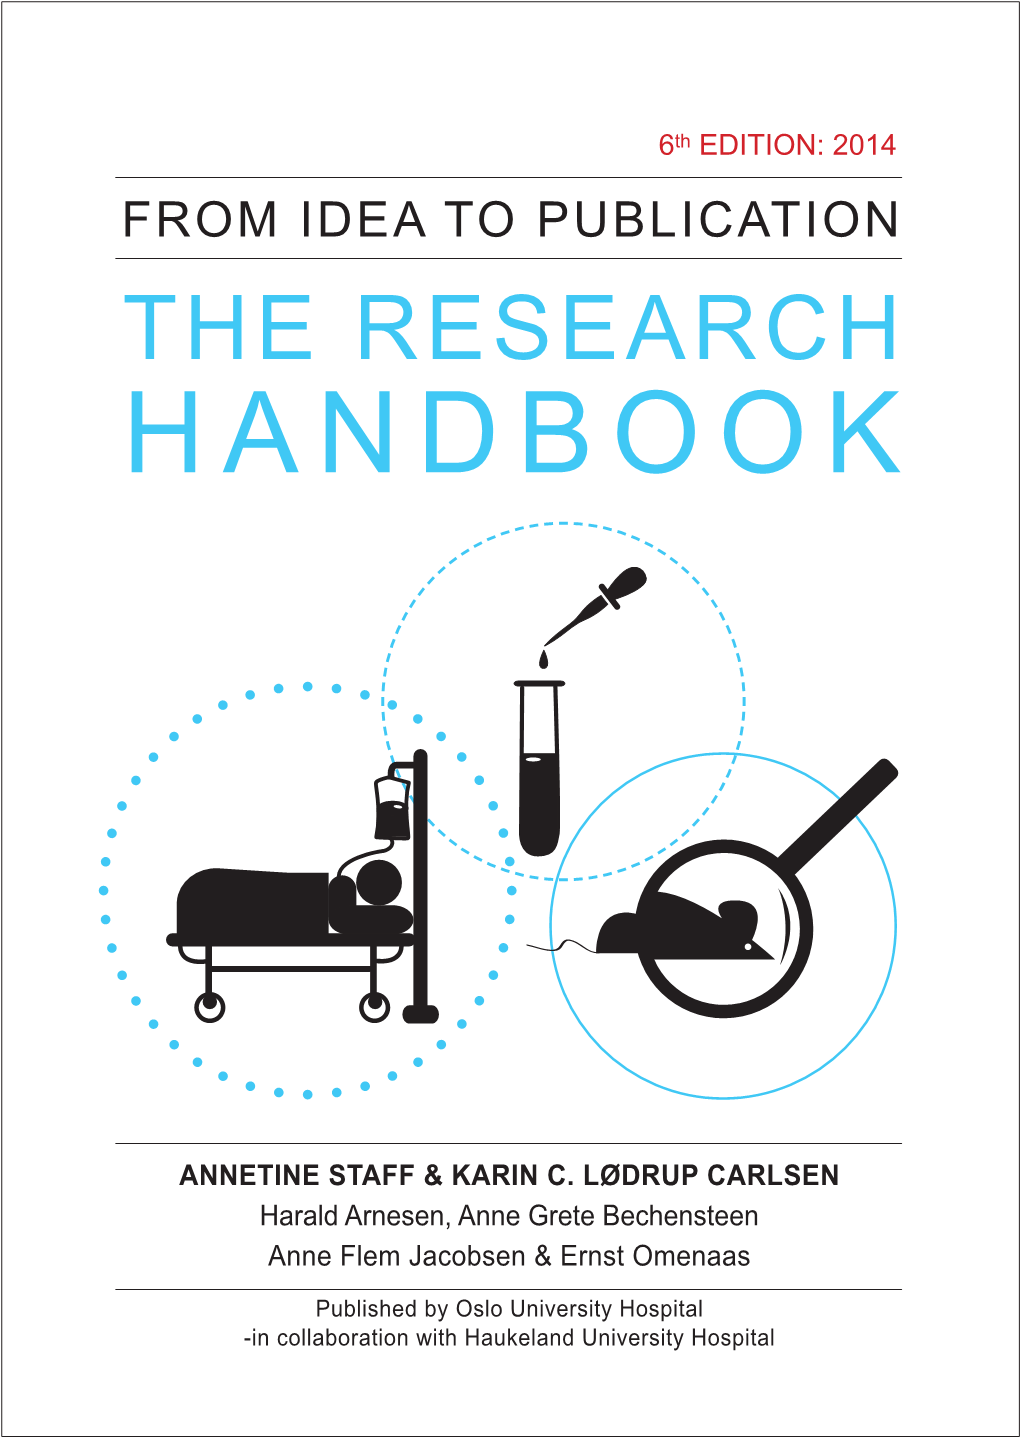 The Research Handbook